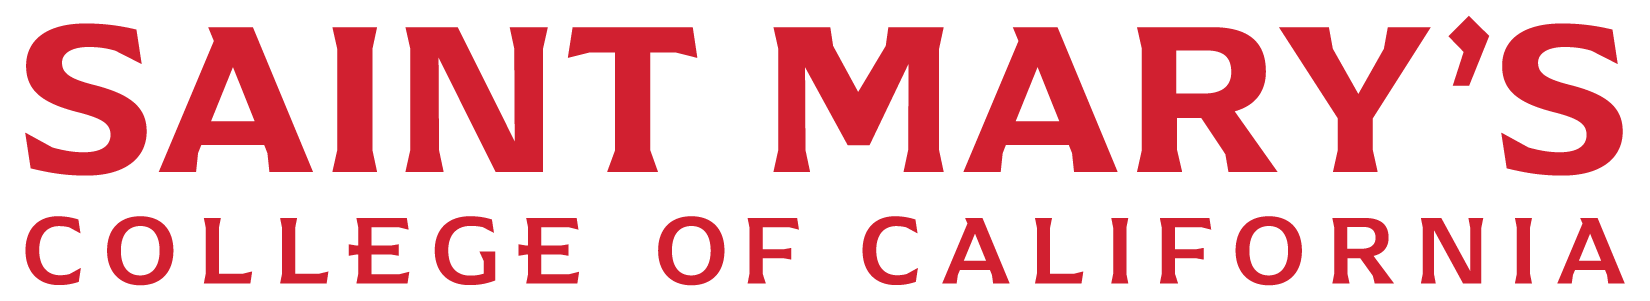 Saint Mary's College of California Word Mark